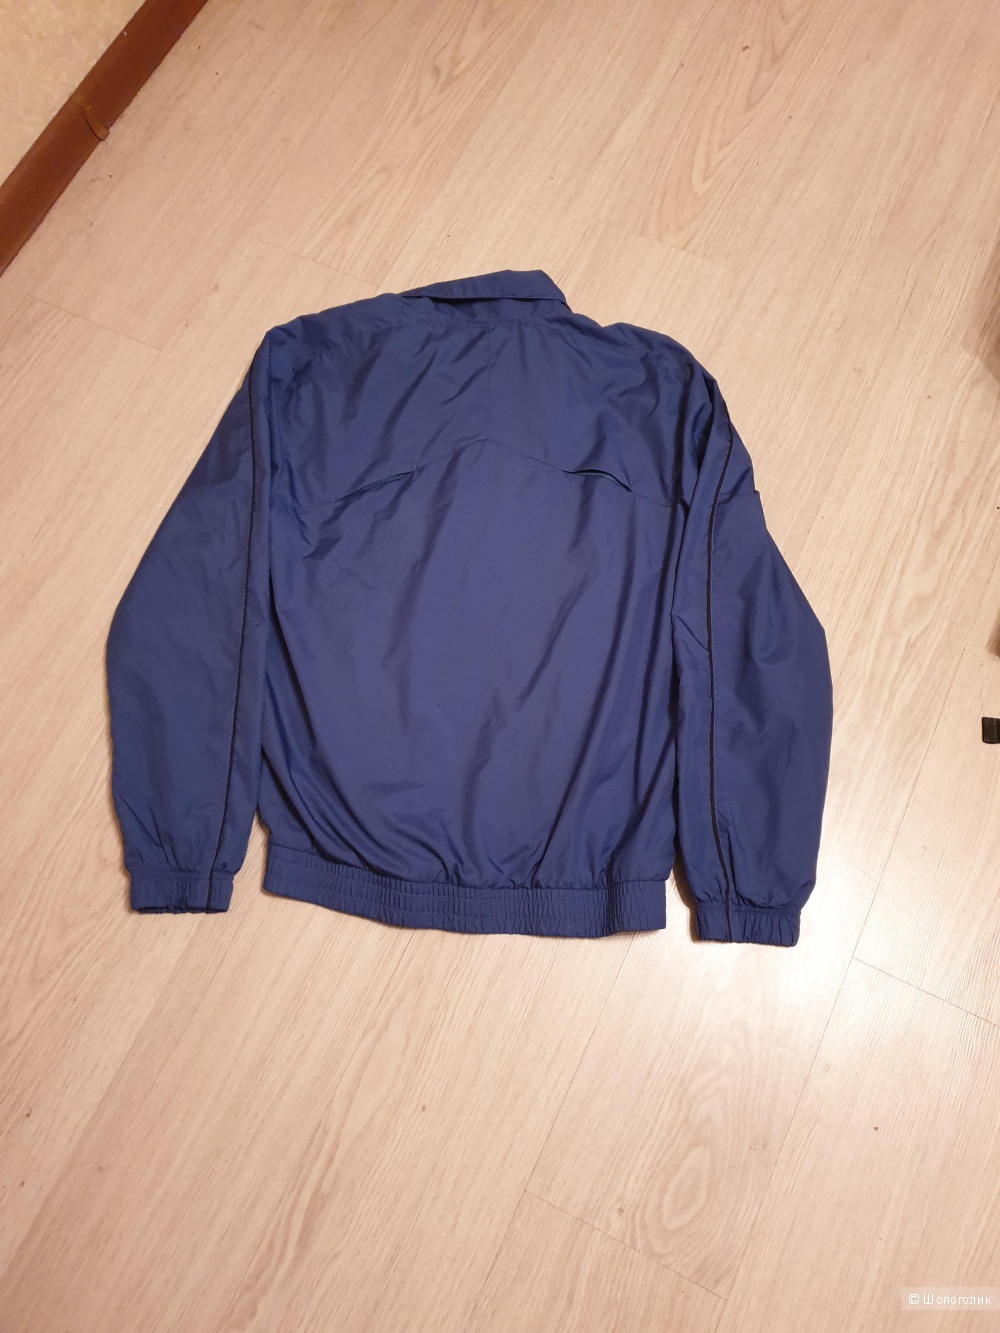 Спортивная куртка ф-ма Reebok 52 размера